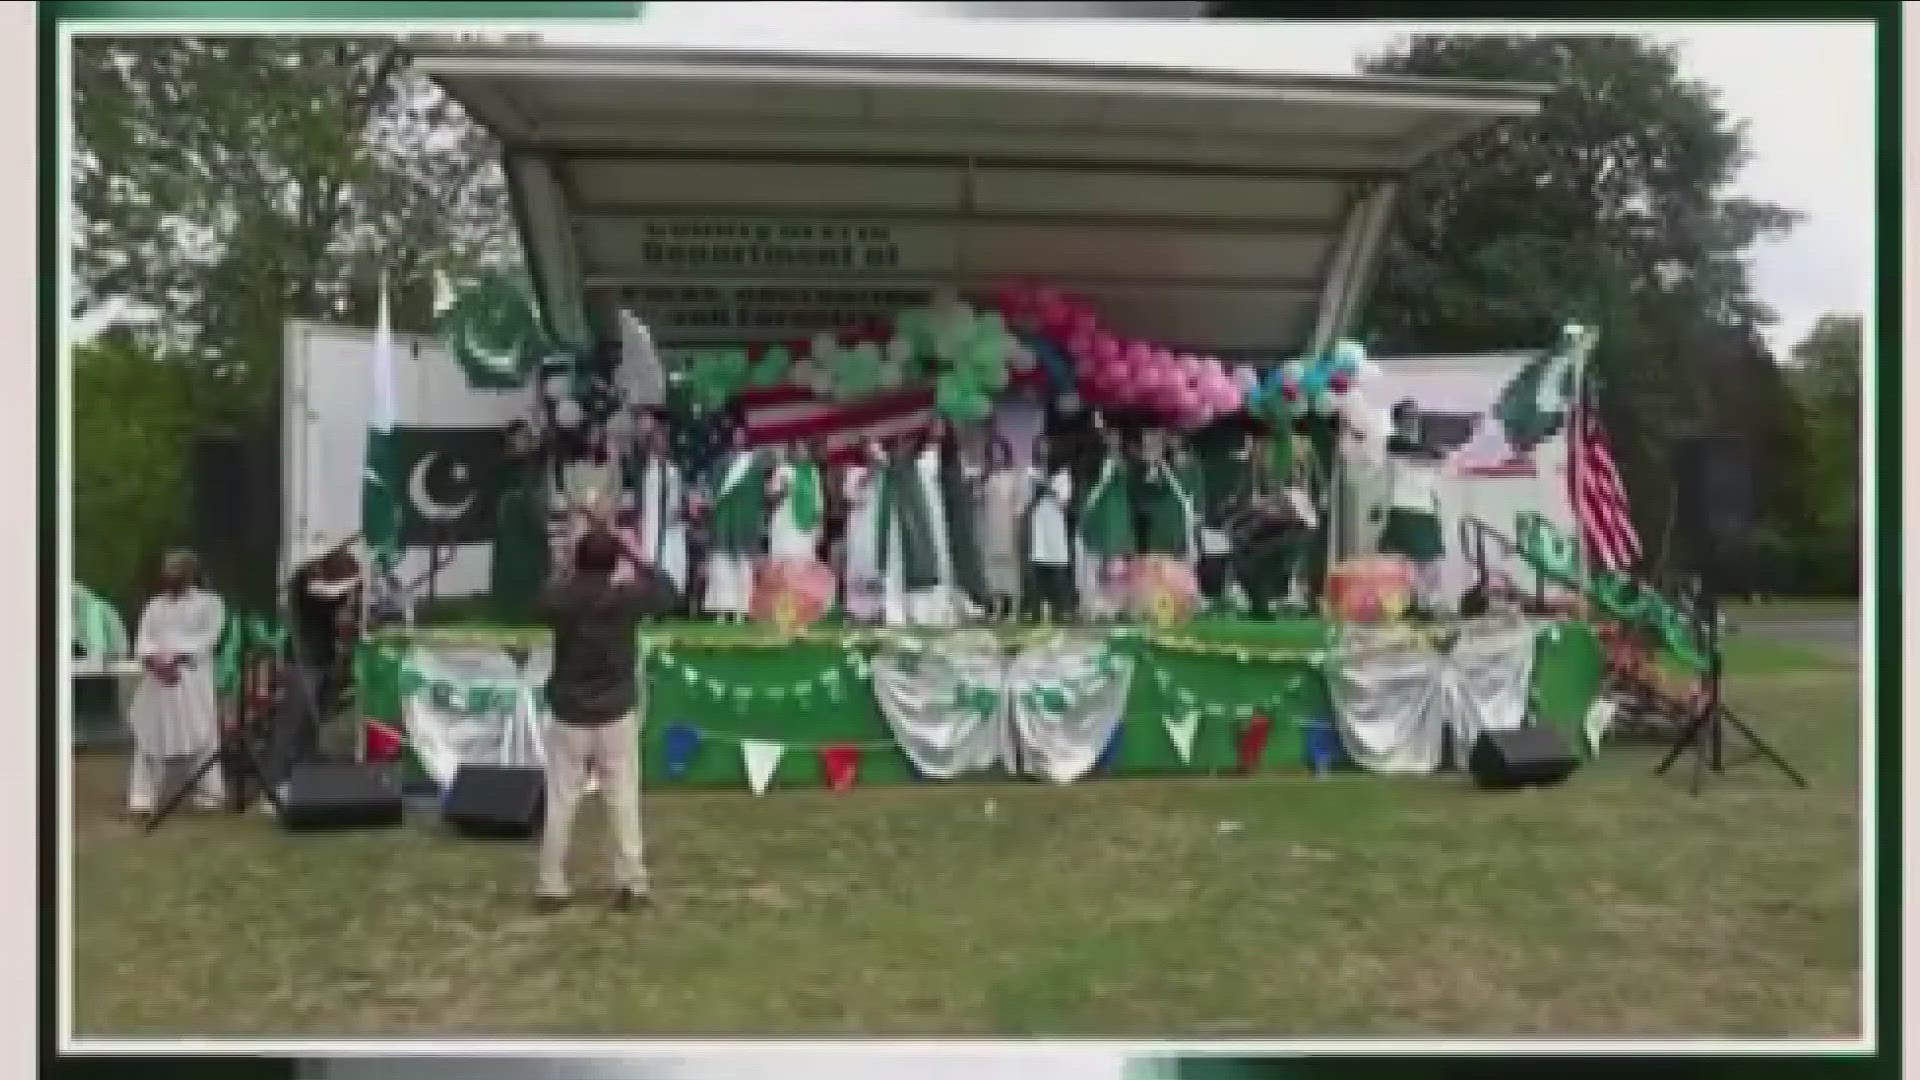 Local Indian, Pakistani organizations celebrate Independence Day